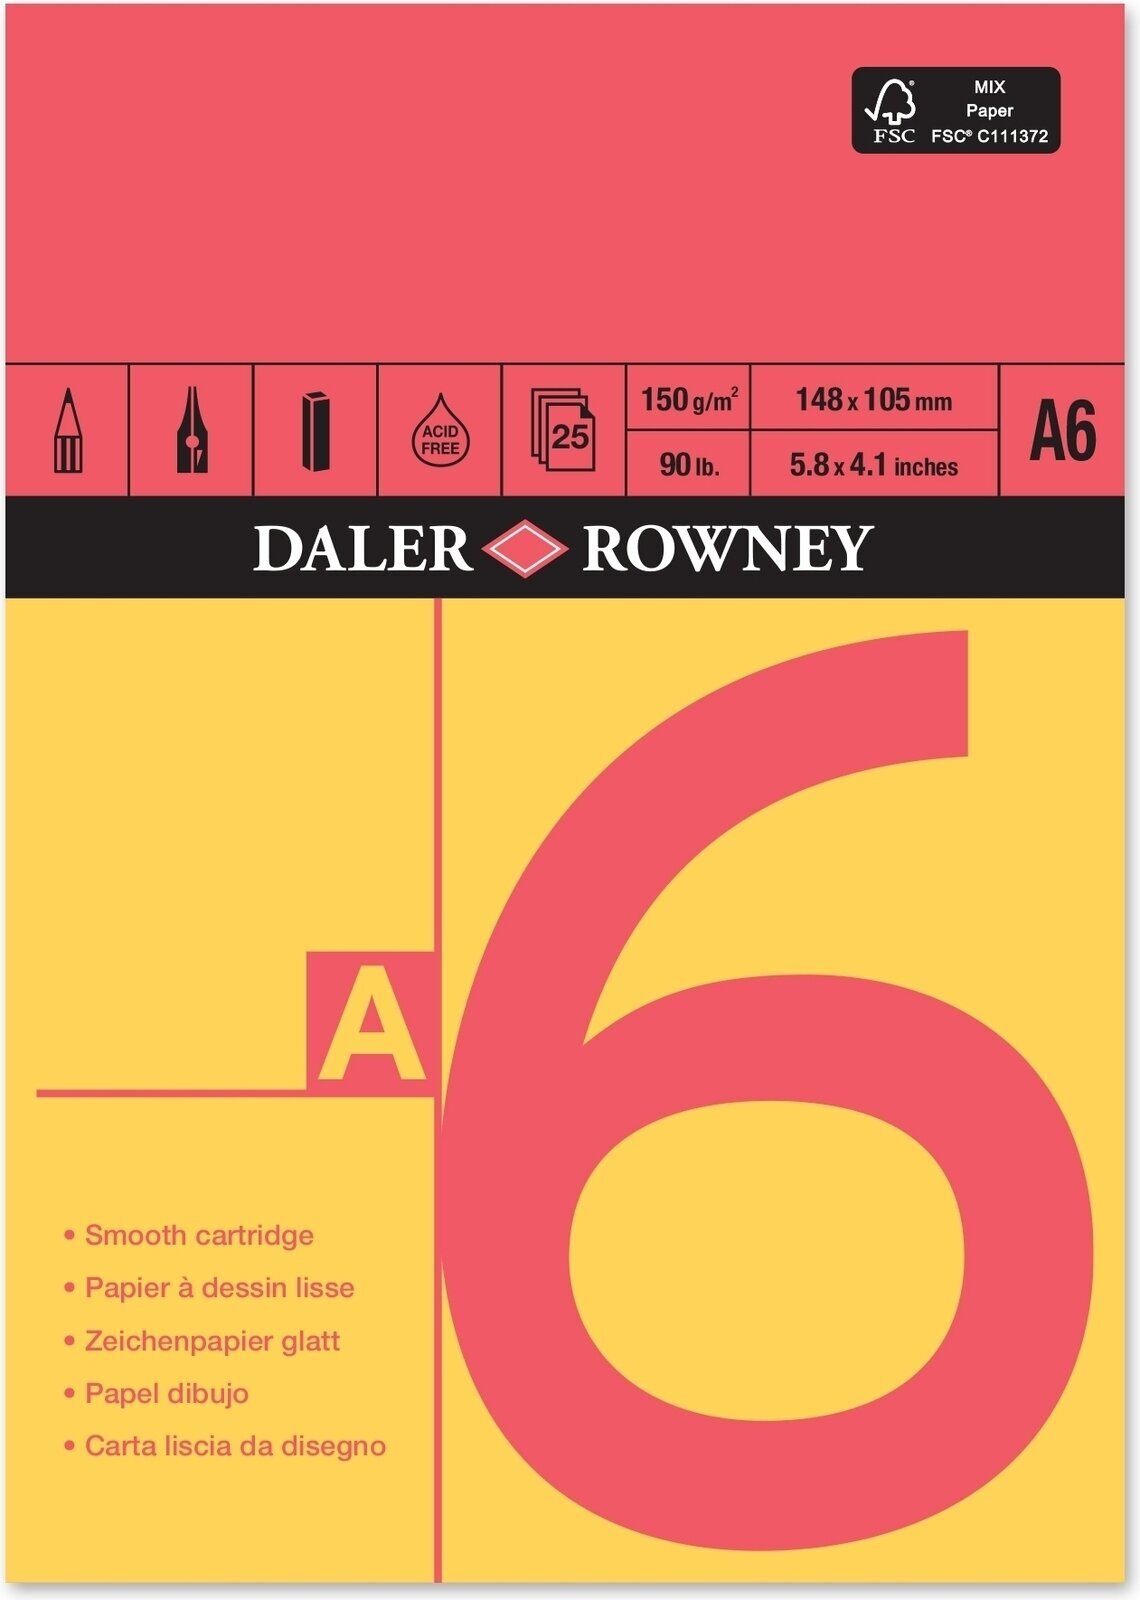 Vázlattömb Daler Rowney Red and Yellow Drawing Paper A6 150 g Vázlattömb